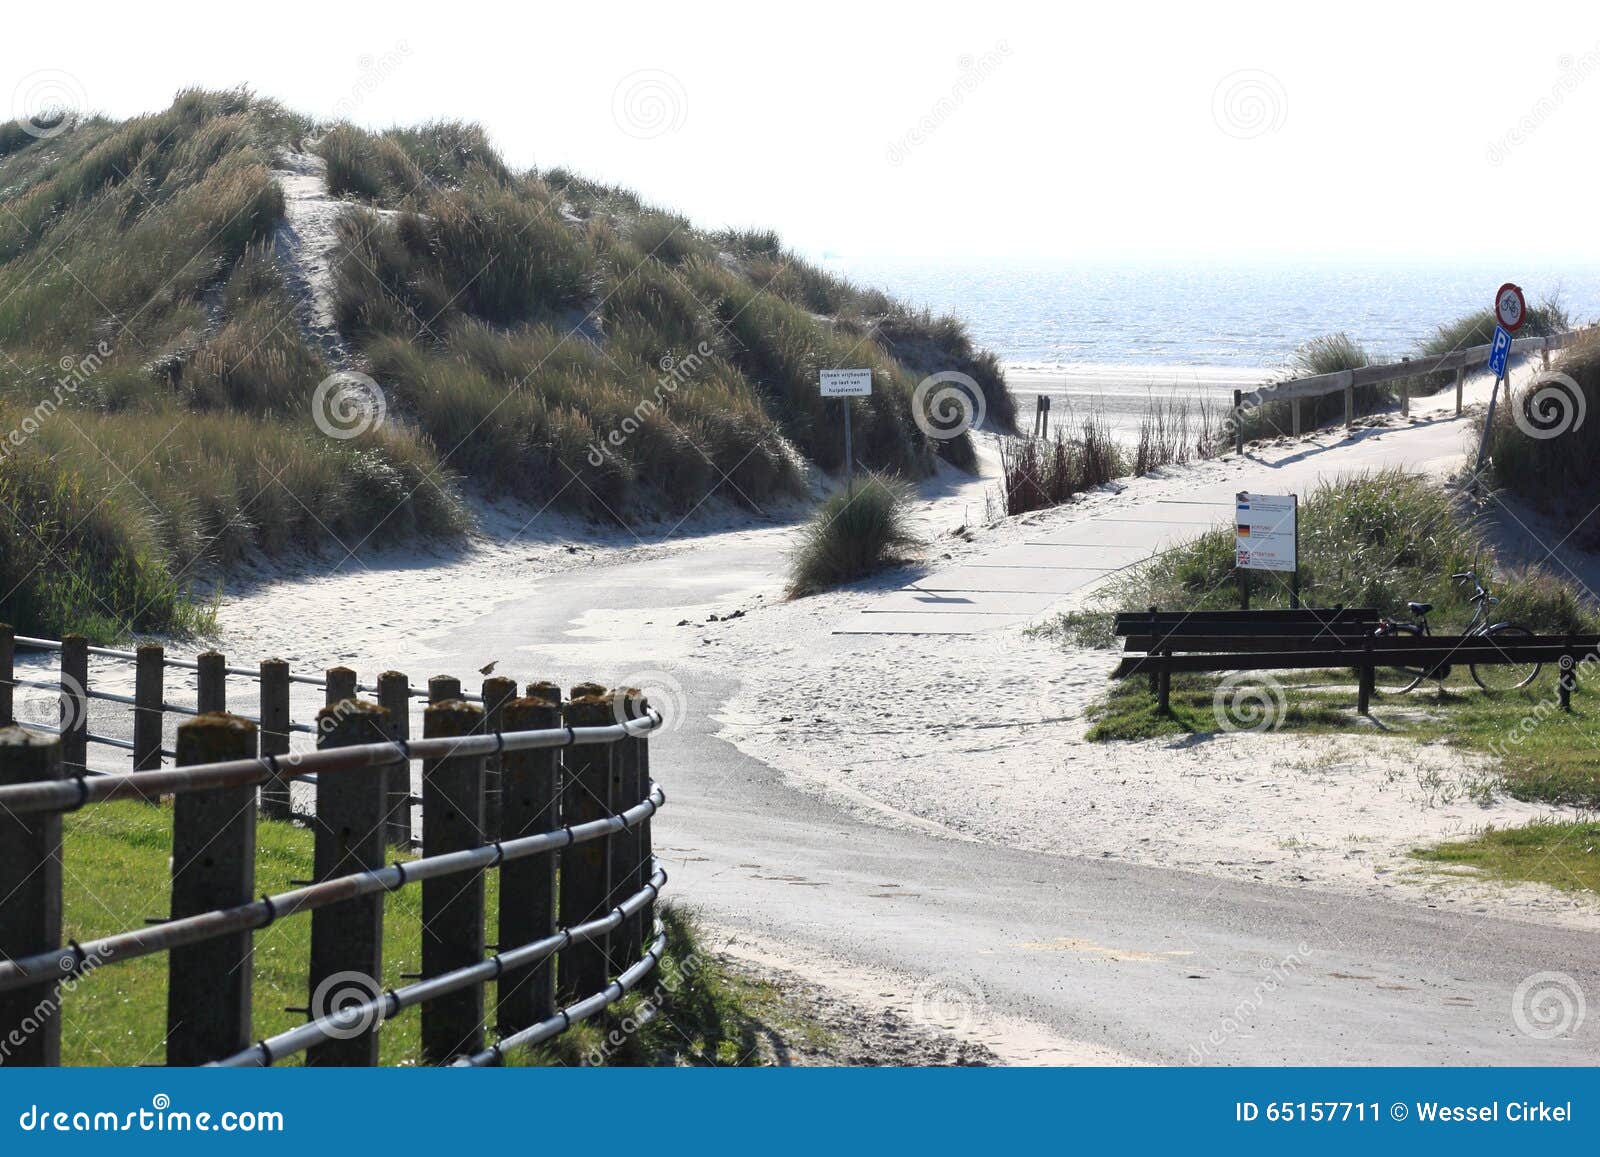 dunes and beach at ameland island, holland